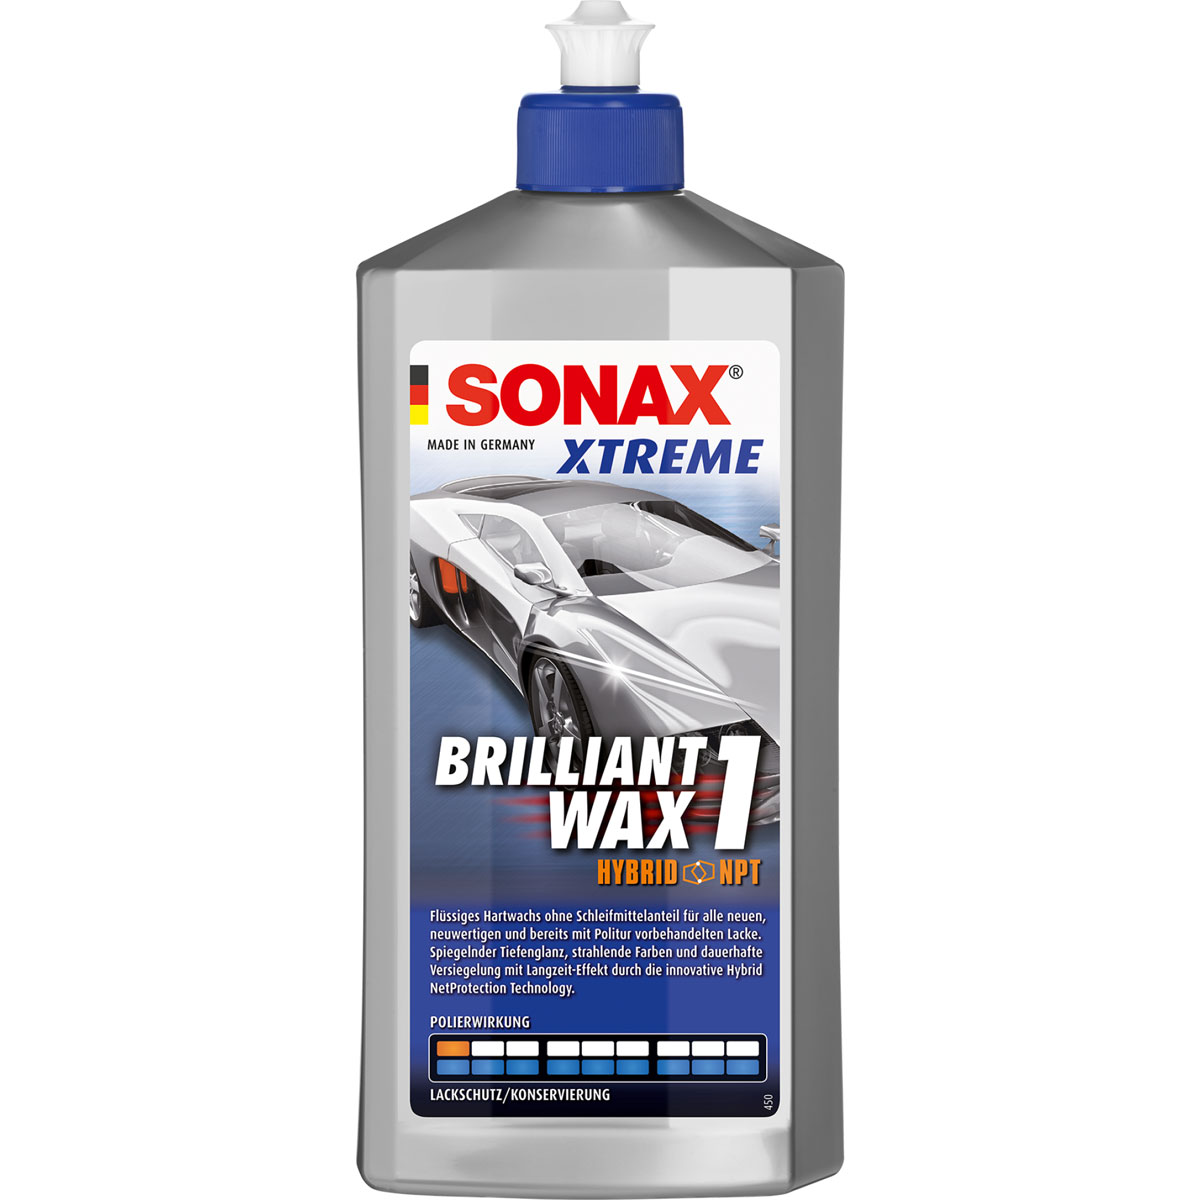 Sonax Antifrost & Klarsicht Konzentrat Citrusduft 250 ml